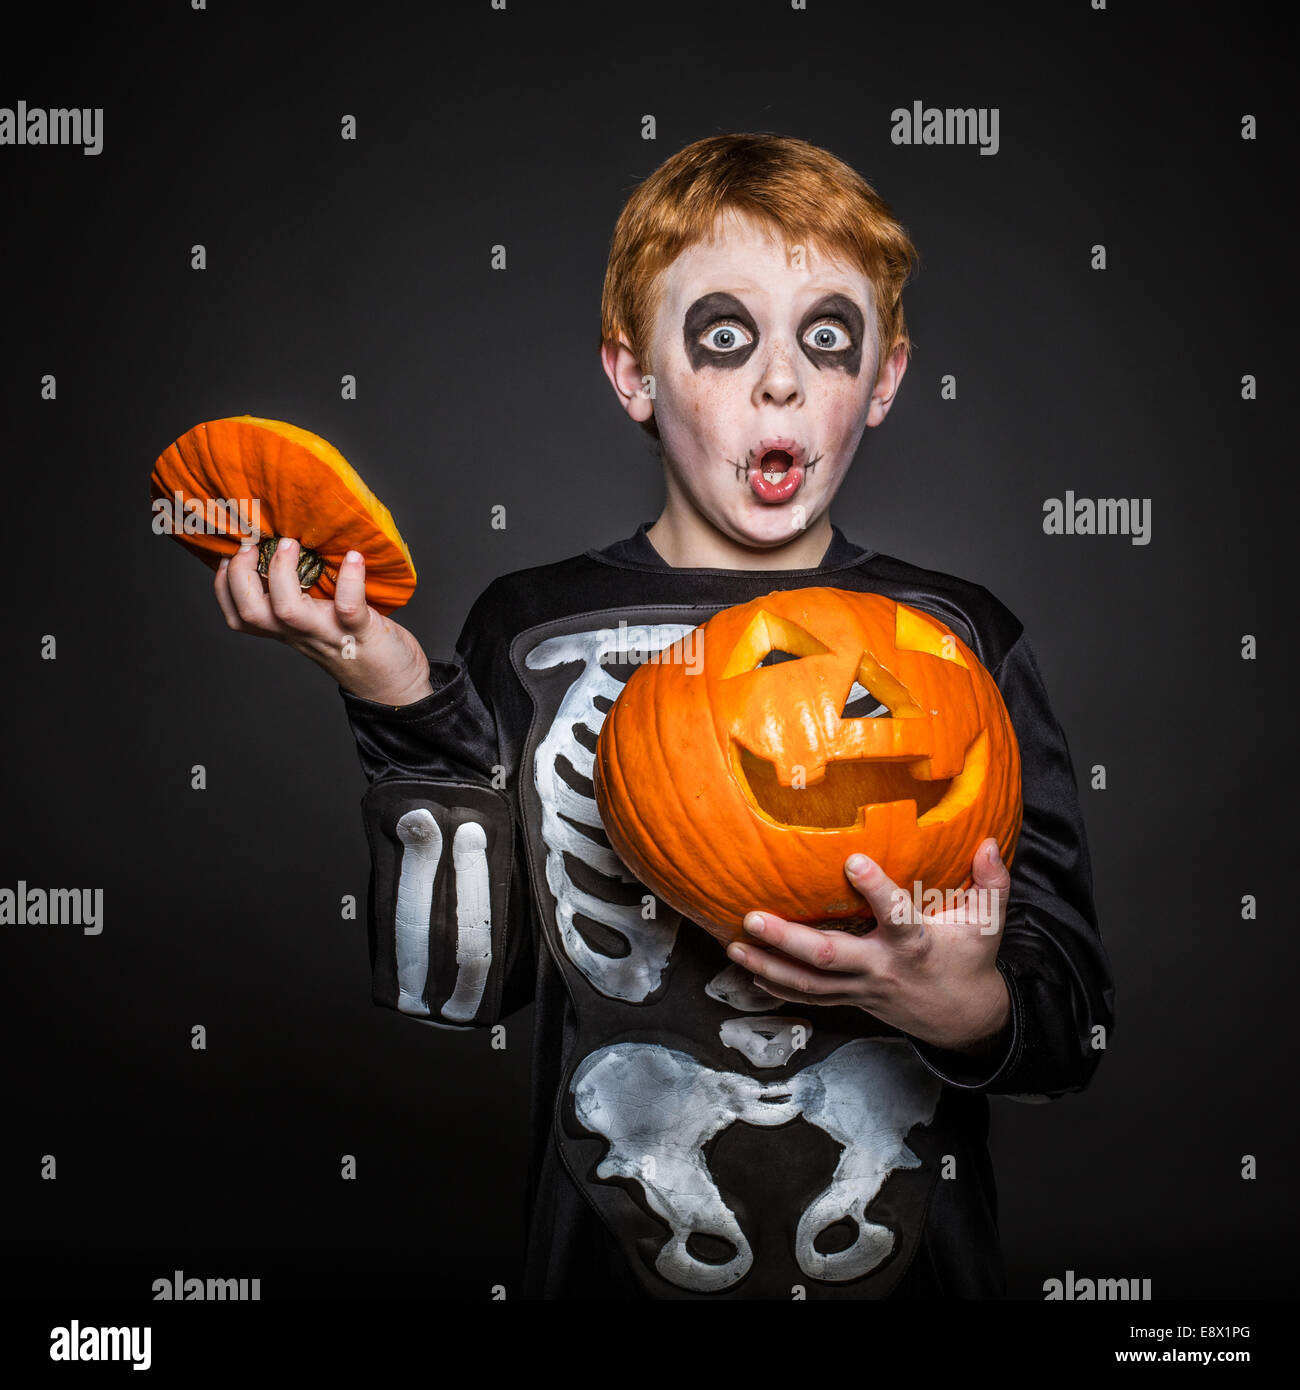 Surprised red hair kid in Halloween costume holding a orange pumpkin.  Skeleton Stock Photo - Alamy